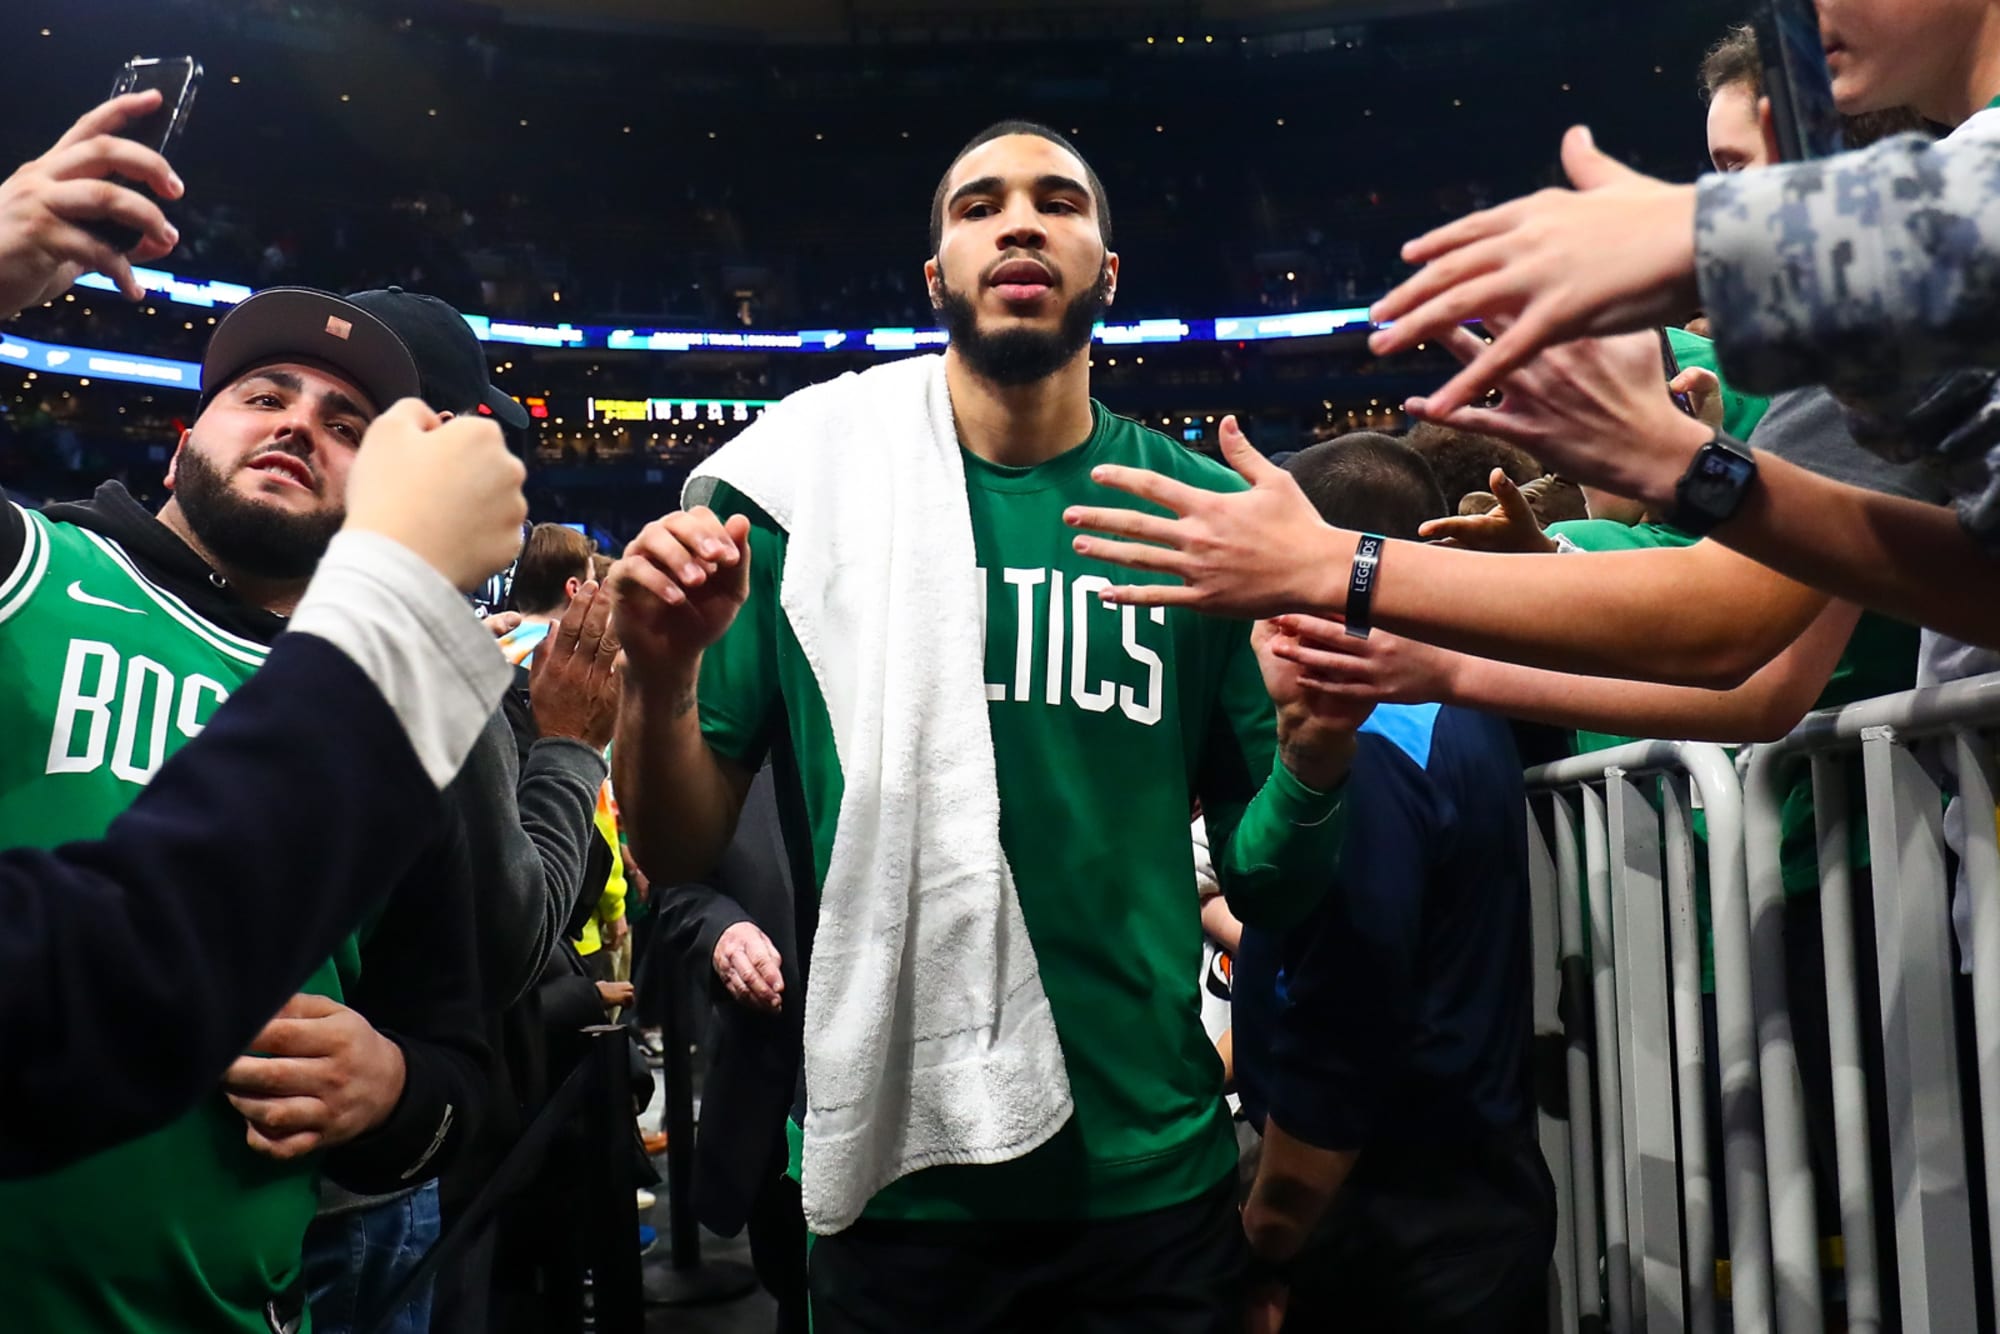 Celtics notes: Jayson Tatum shows marked improvement for C's